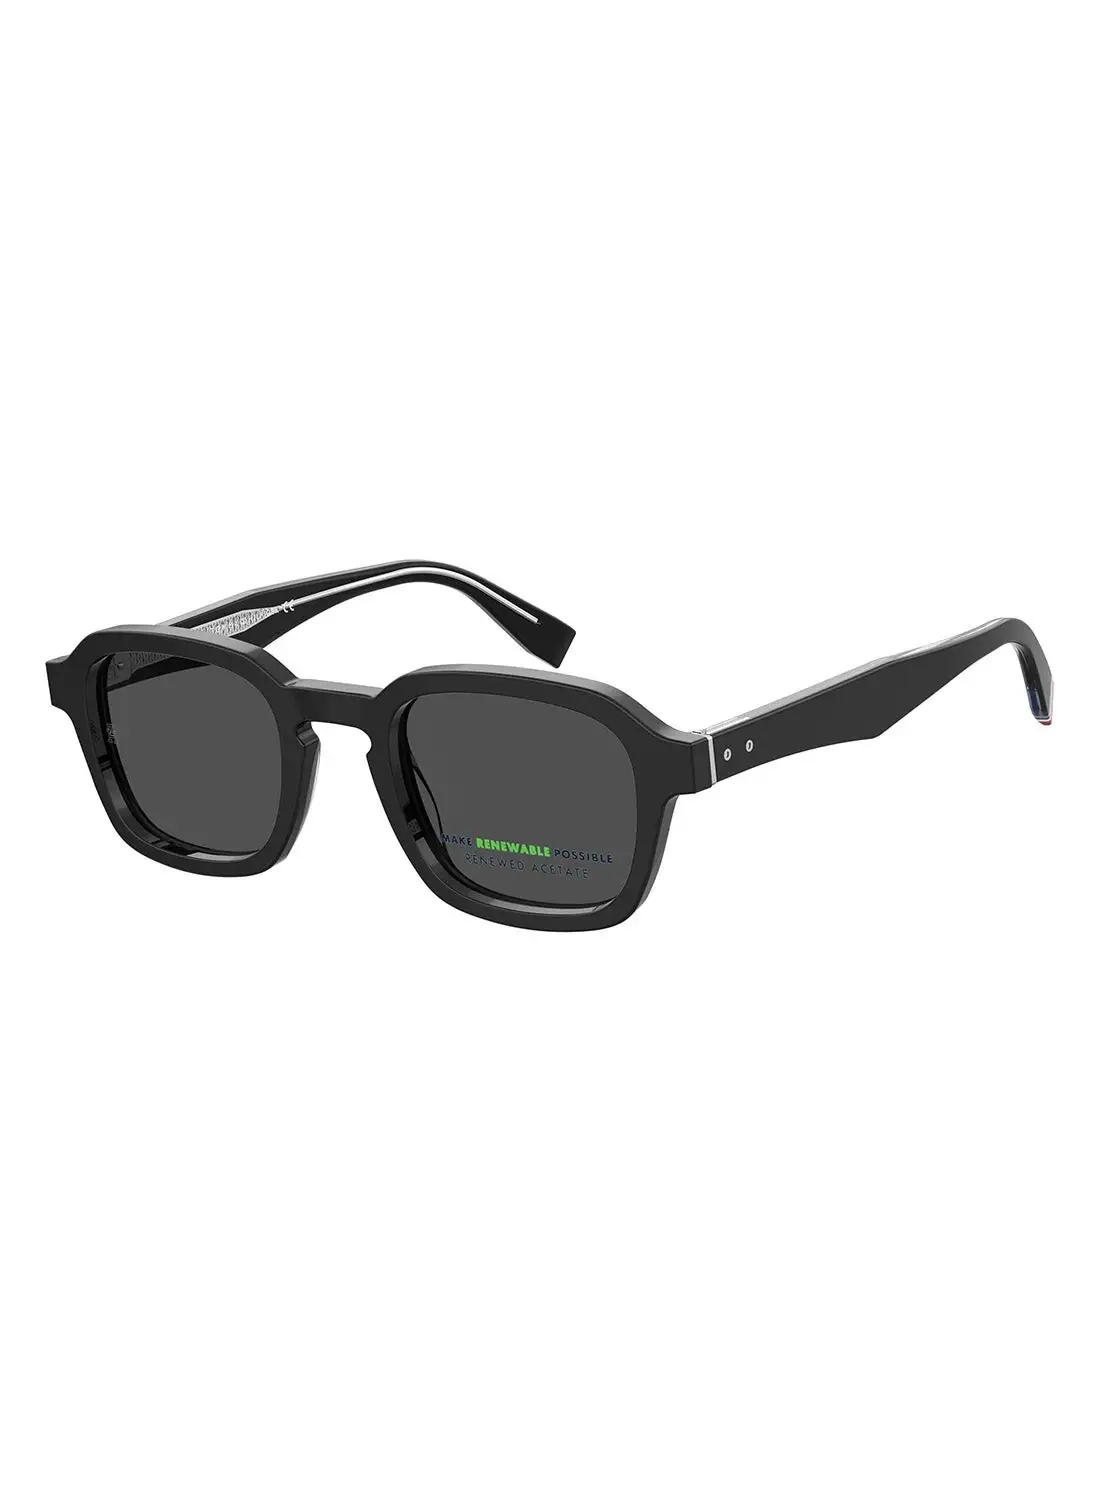 TOMMY HILFIGER Men's UV Protection Rectangular Sunglasses - Th 2032/S Black Millimeter - Lens Size: 49 Mm